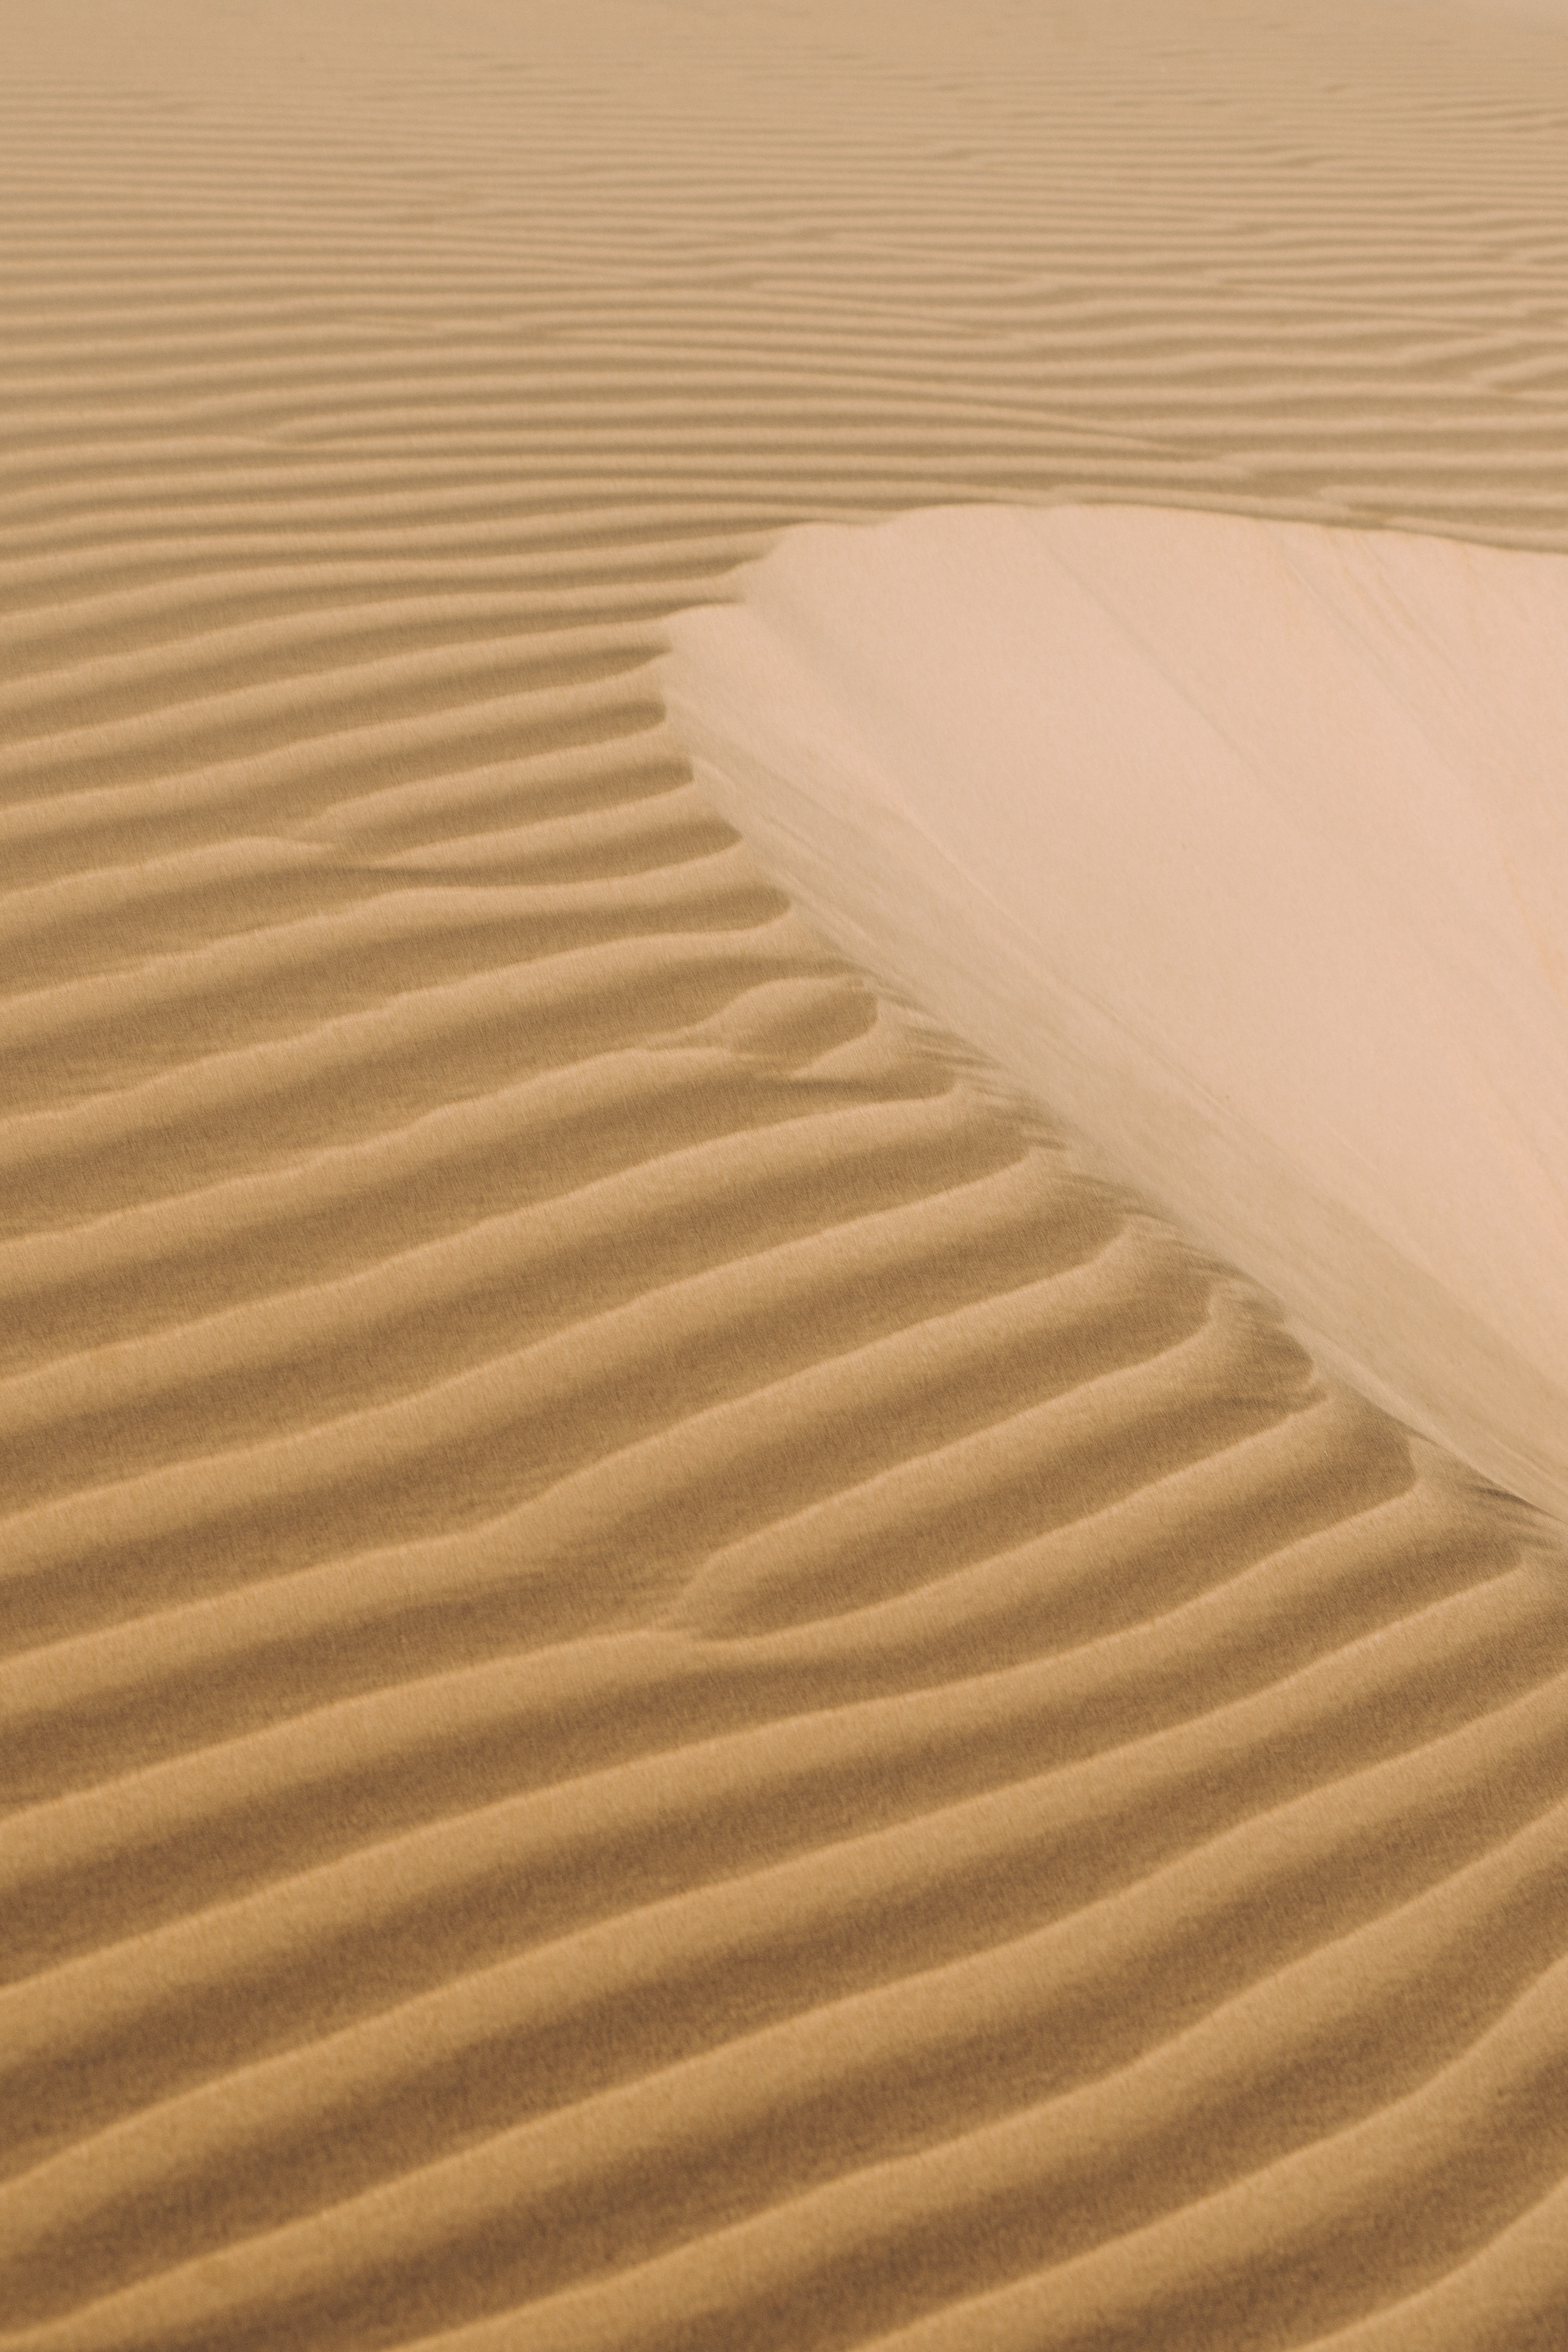 desktop Images nature, waves, sand, desert, wavy, dunes